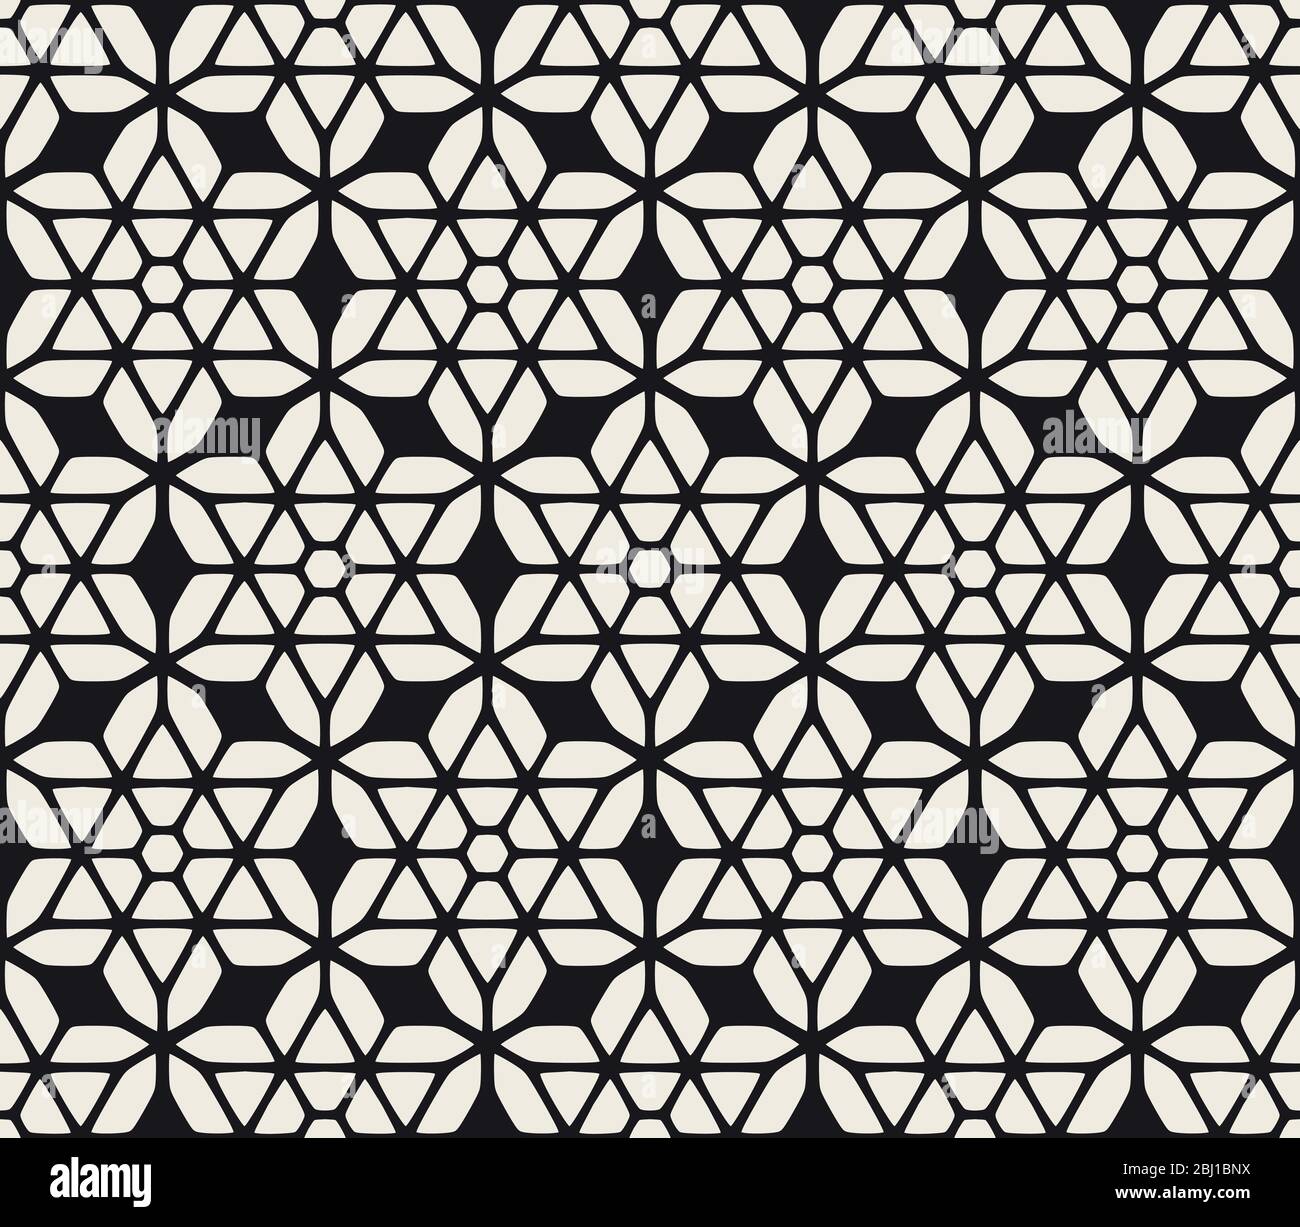 Vektor-Nahtloses Muster. Moderne, stilvolle abstrakte Textur. Wiederholen geometrische Blütenblätter Formen Gitter Stock Vektor